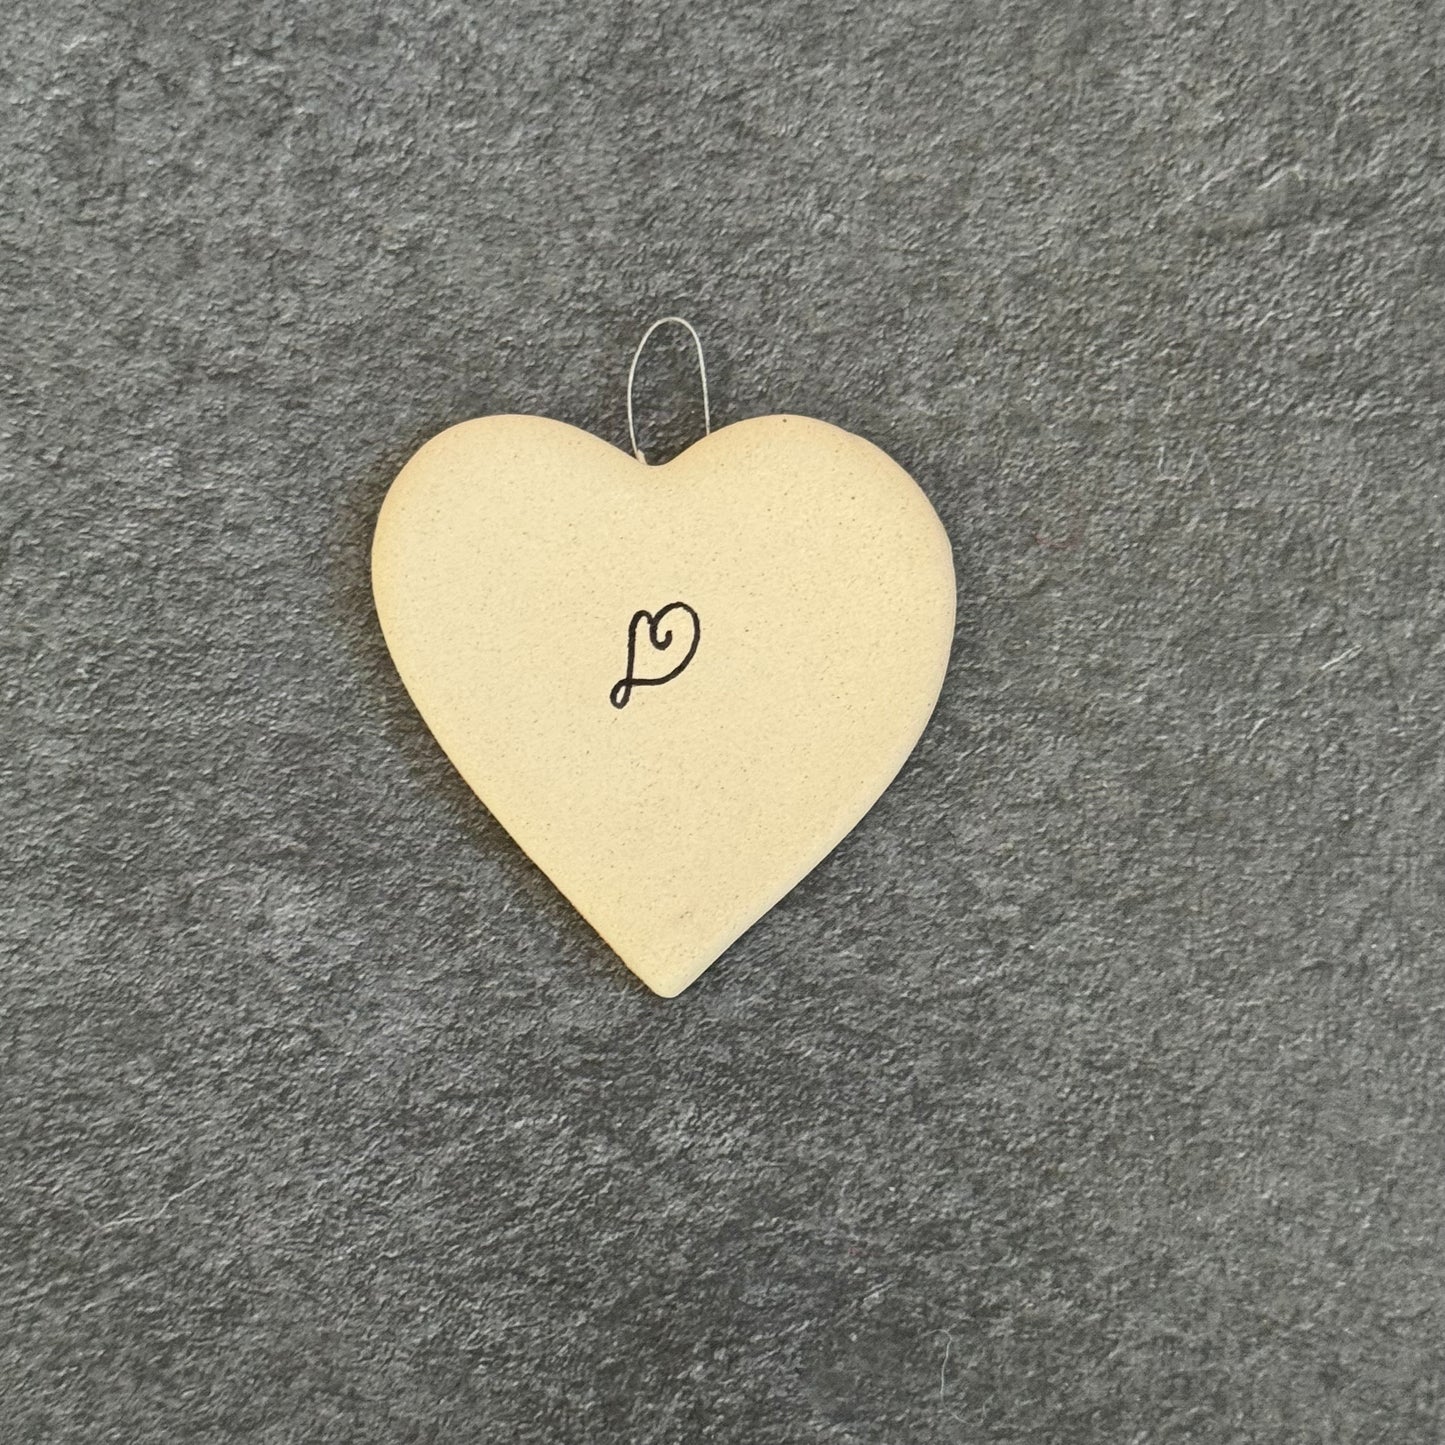 Yellow Heart Ceramic Ornament